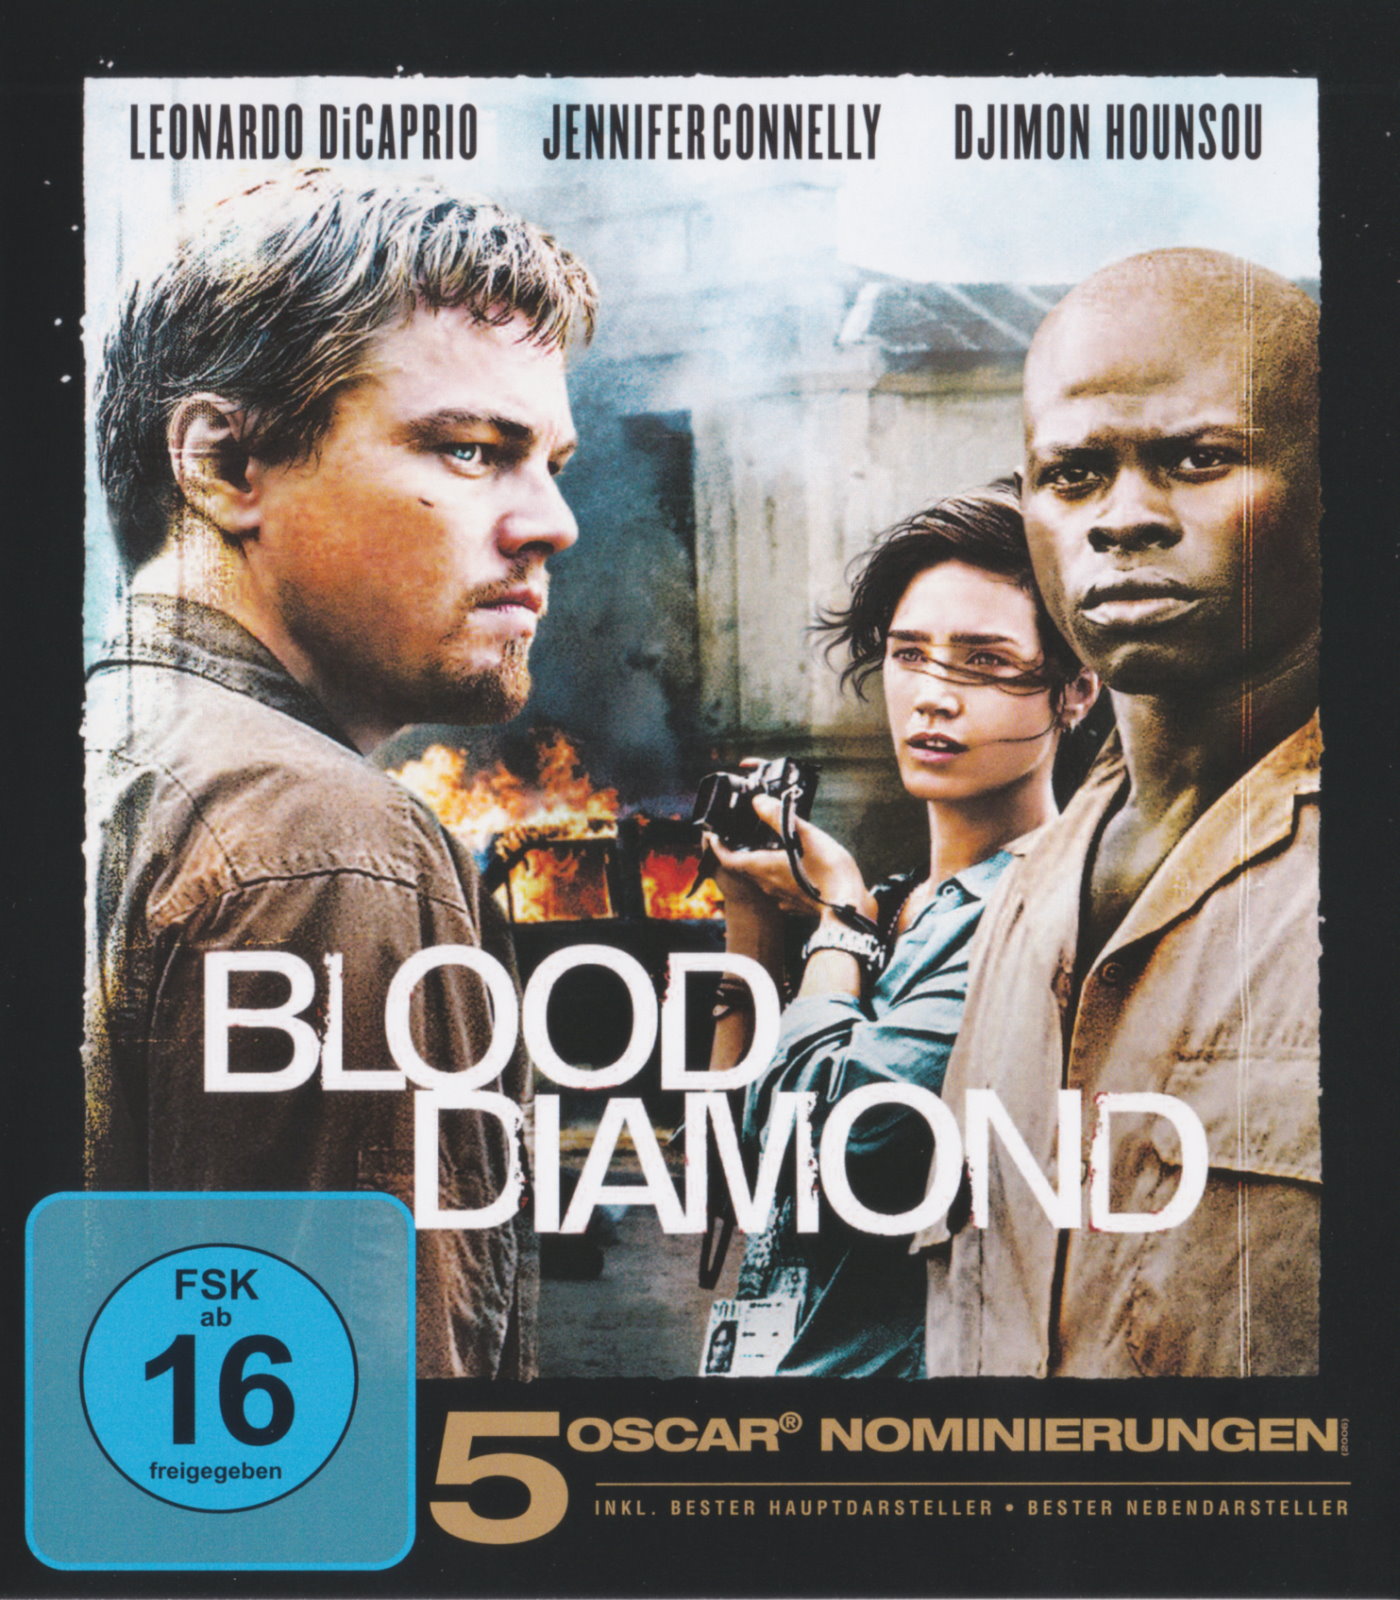 Cover - Blood Diamond.jpg